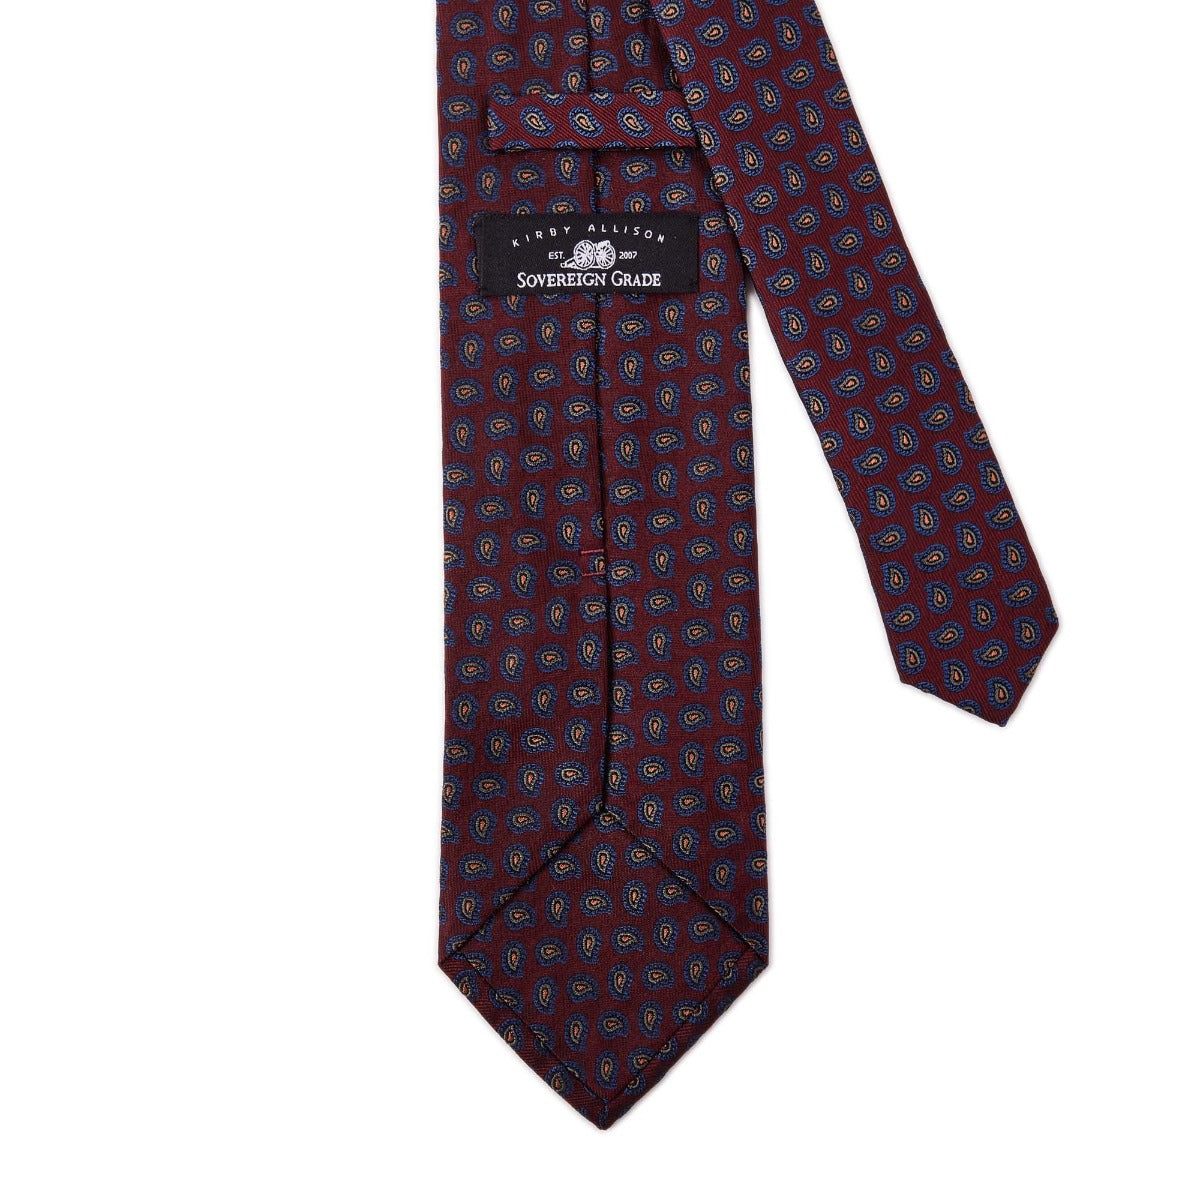 Sovereign Grade Burgundy Paisley Jacquard Silk Tie